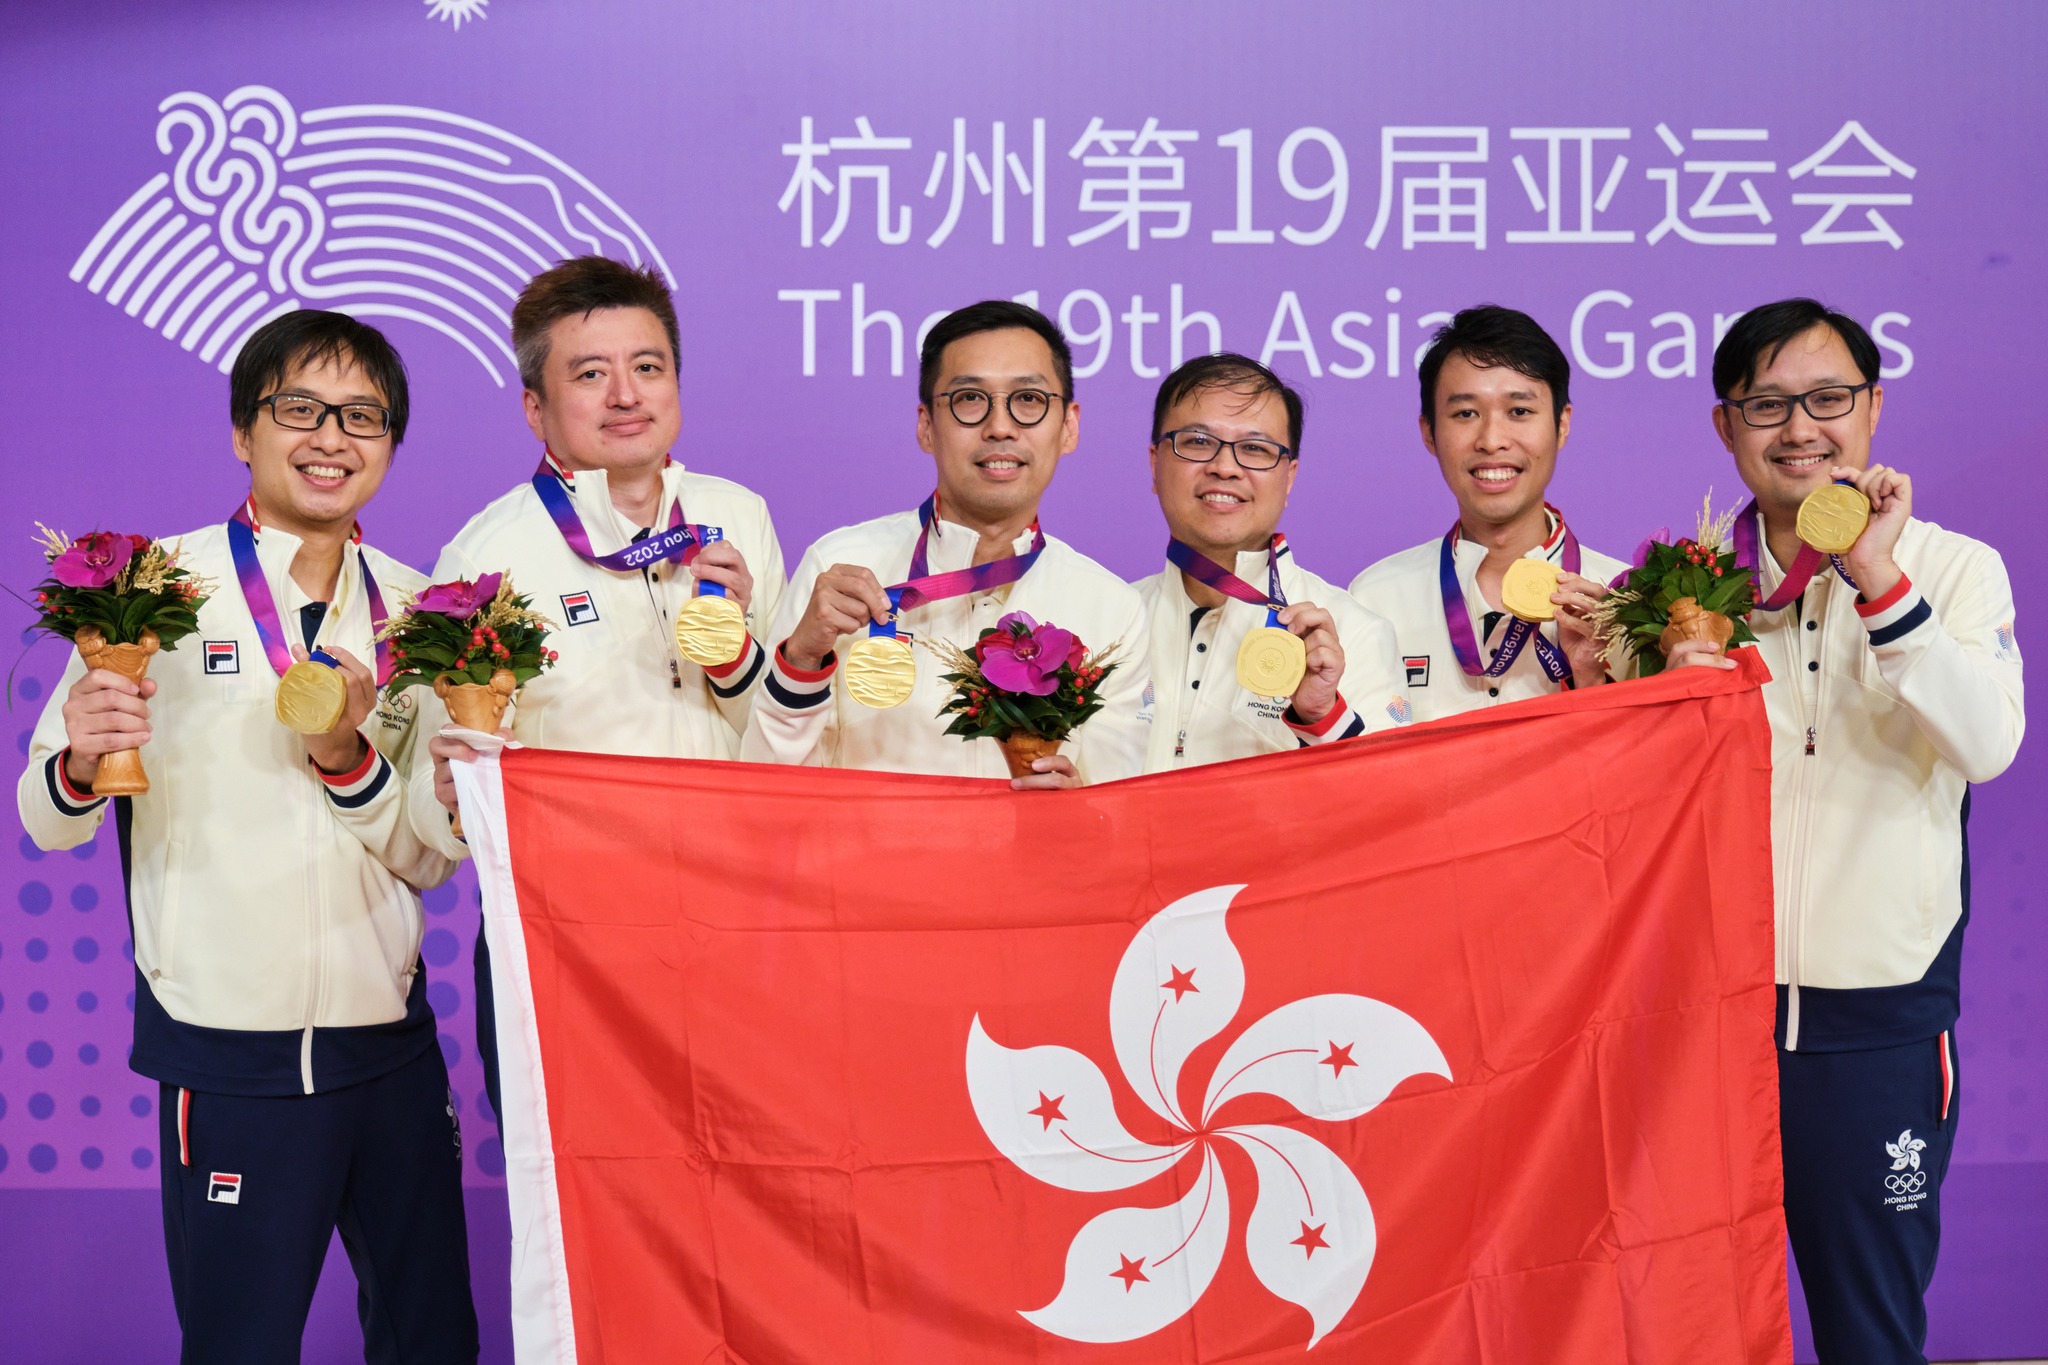 The Men's Bridge Team bags the gold medal for Hong Kong at Asian Games. (2023)